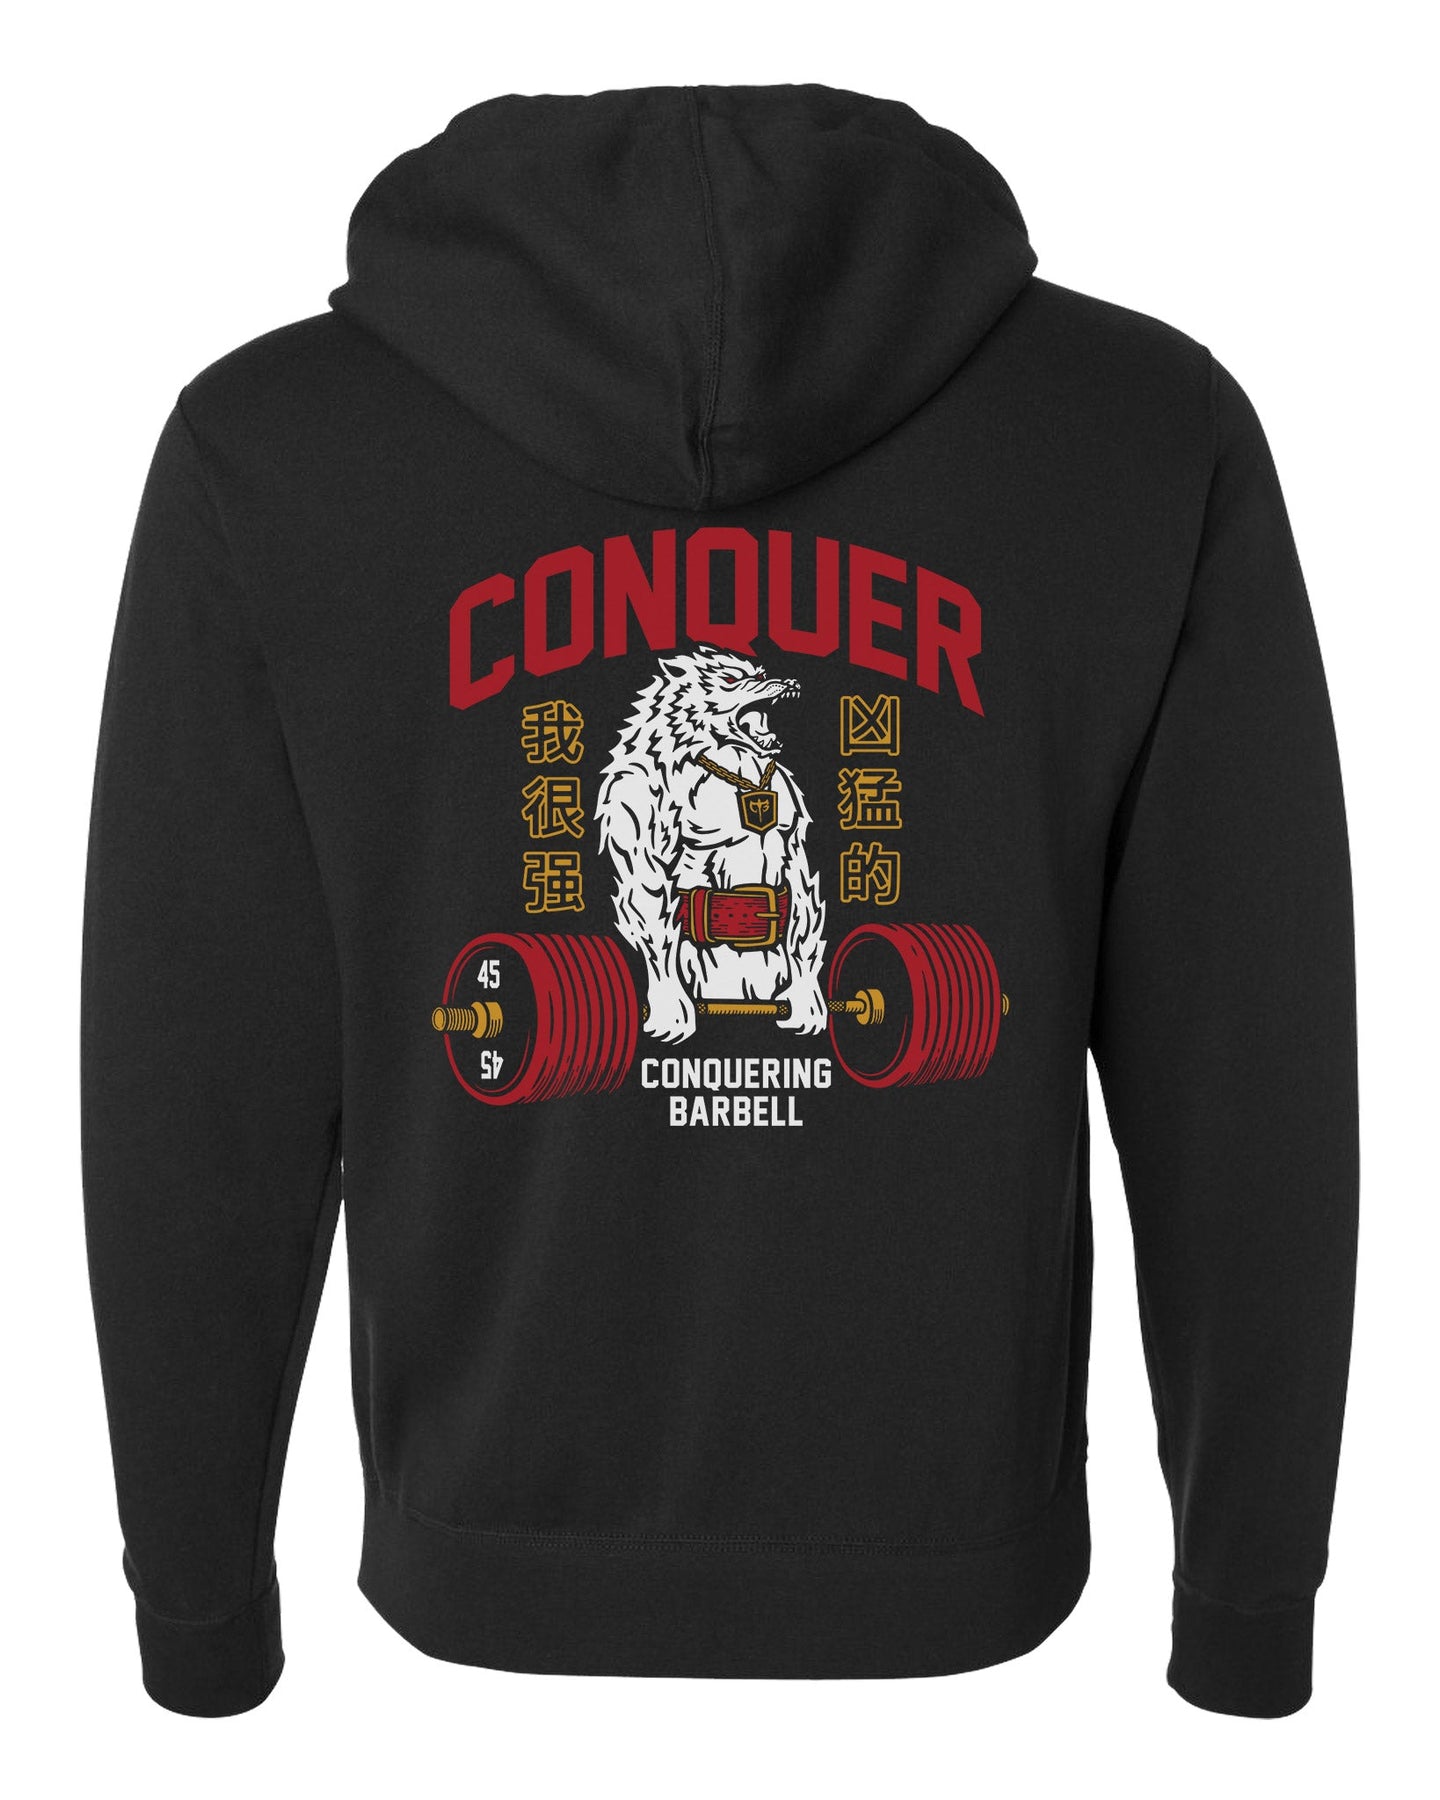 Conquer - Samurai - on Black Pullover Hoodie